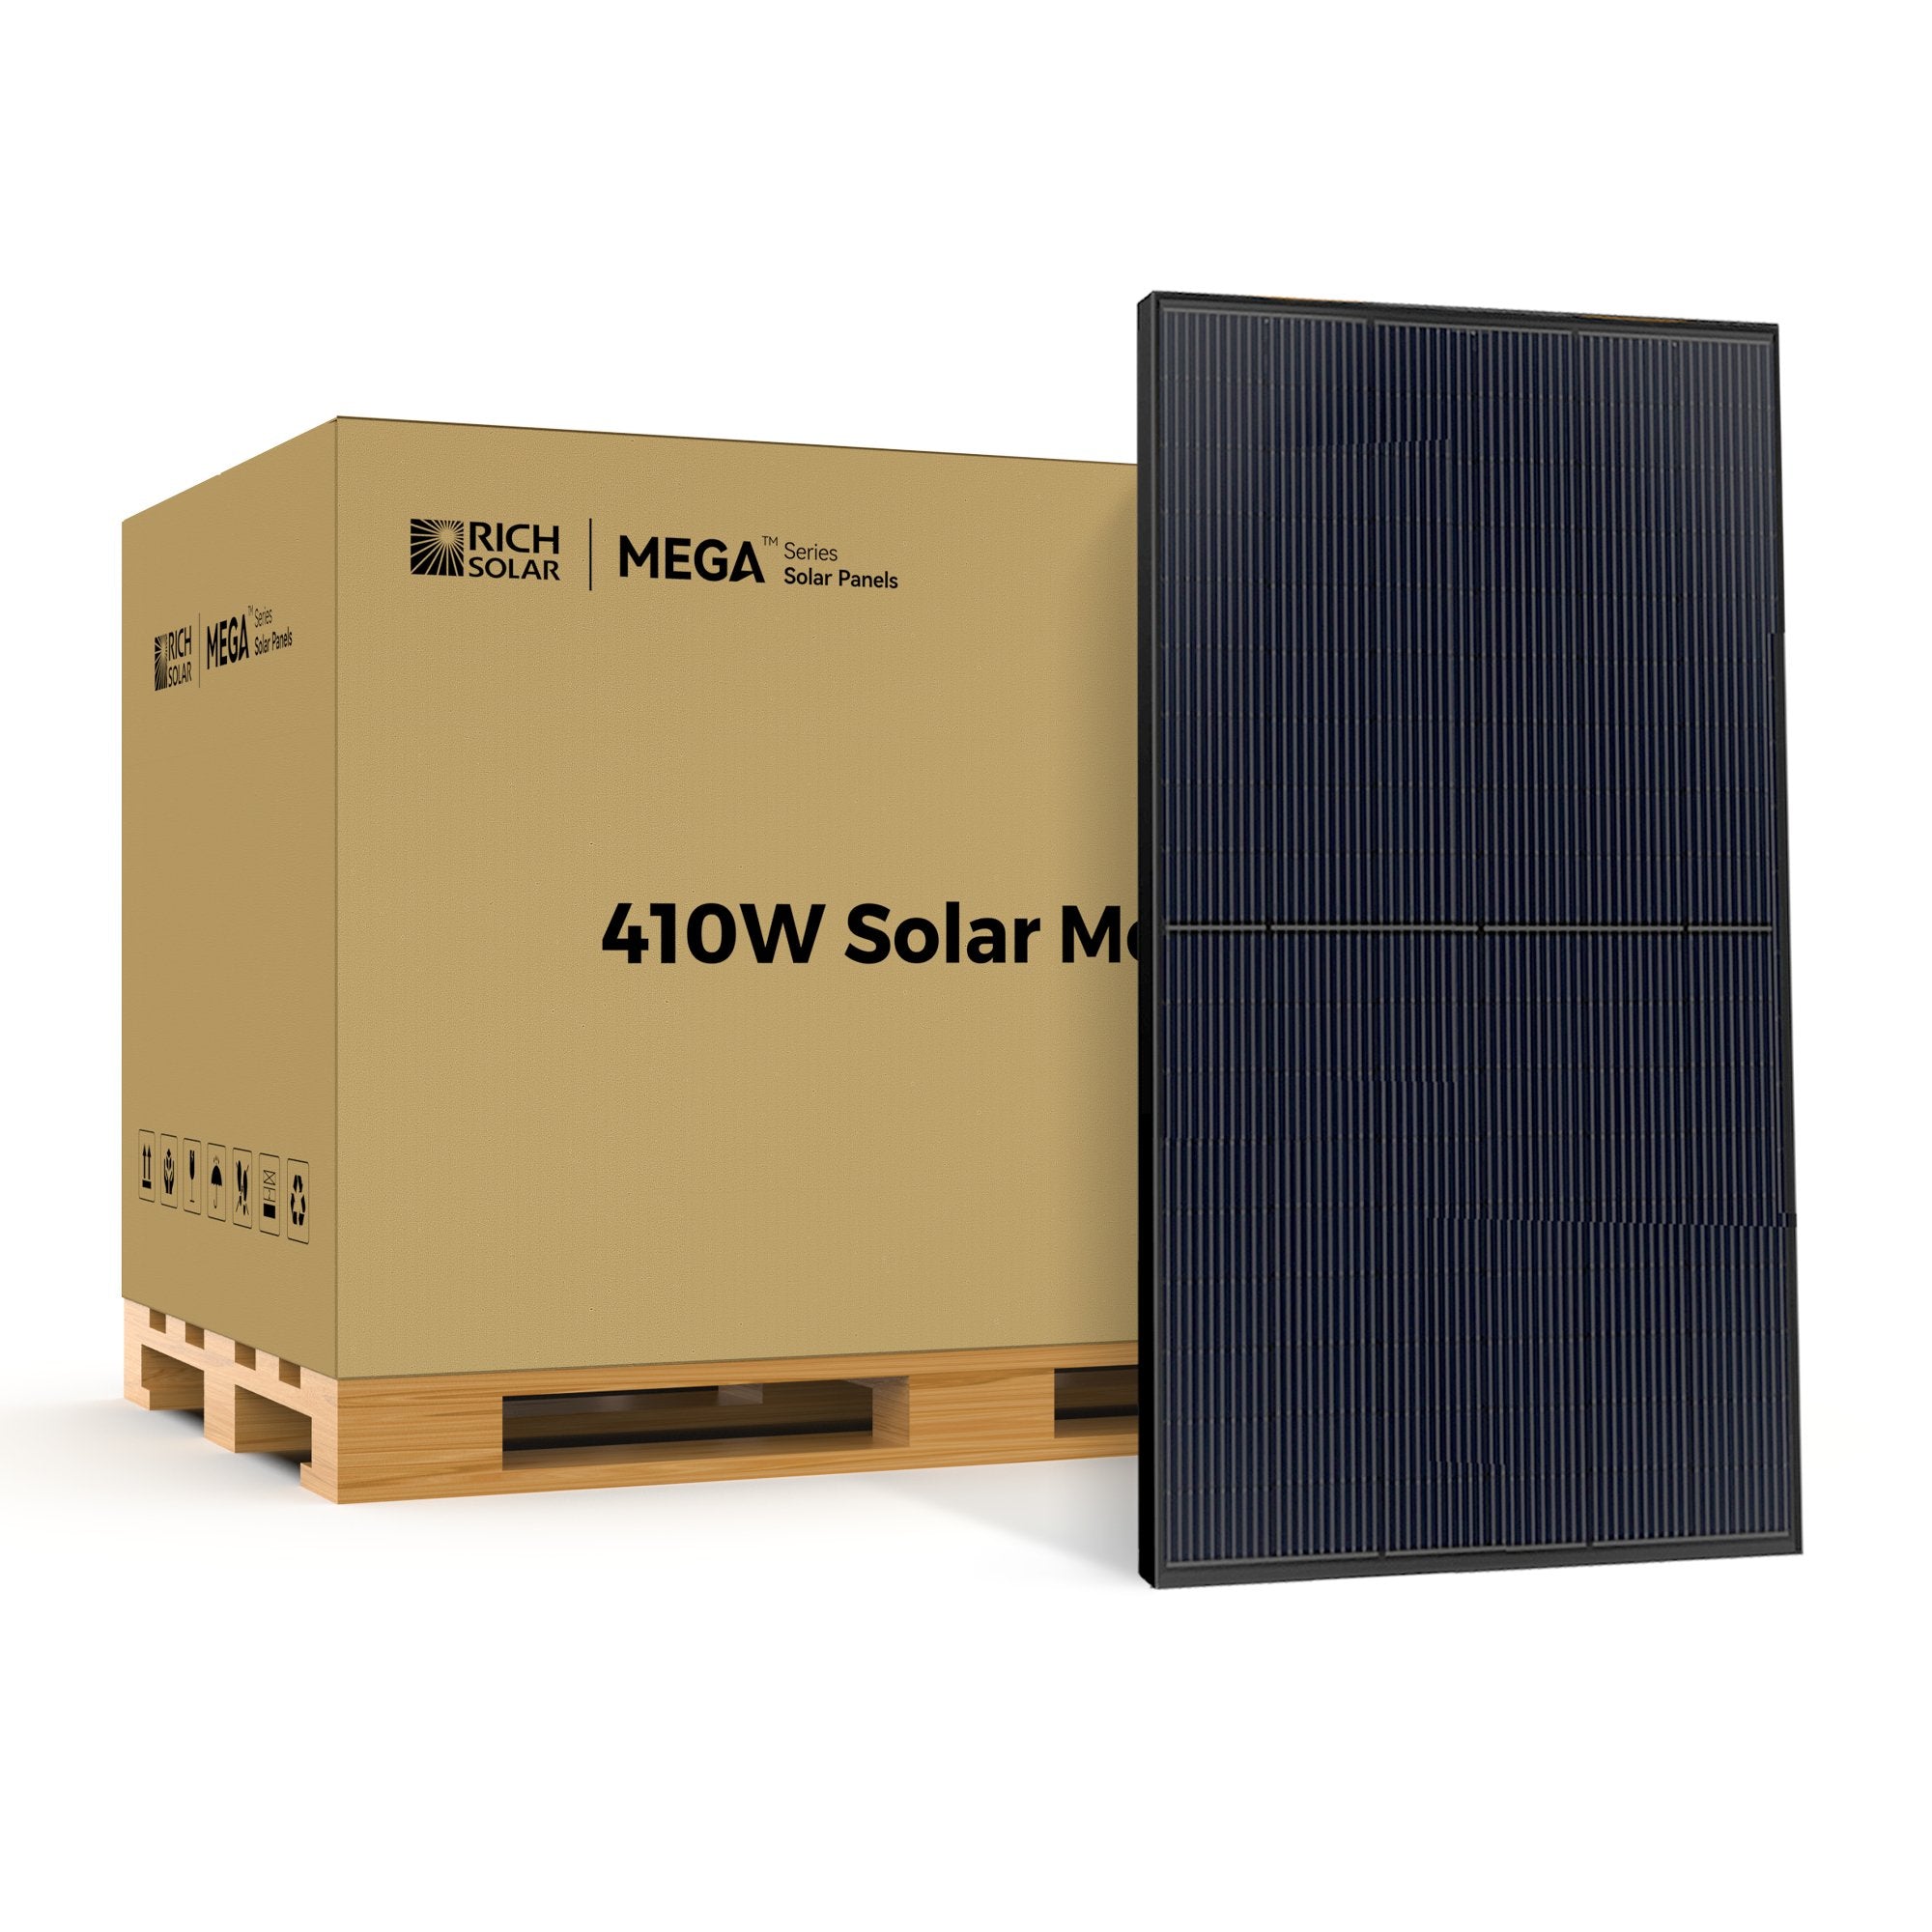 RICH SOLAR MEGA 410 Watt Monocrystalline Solar Panel (12pcs) | High Efficiency | Black Mono-facial Module | Grid-Tie | Off-Grid - Solar Generators and Power Stations Plus